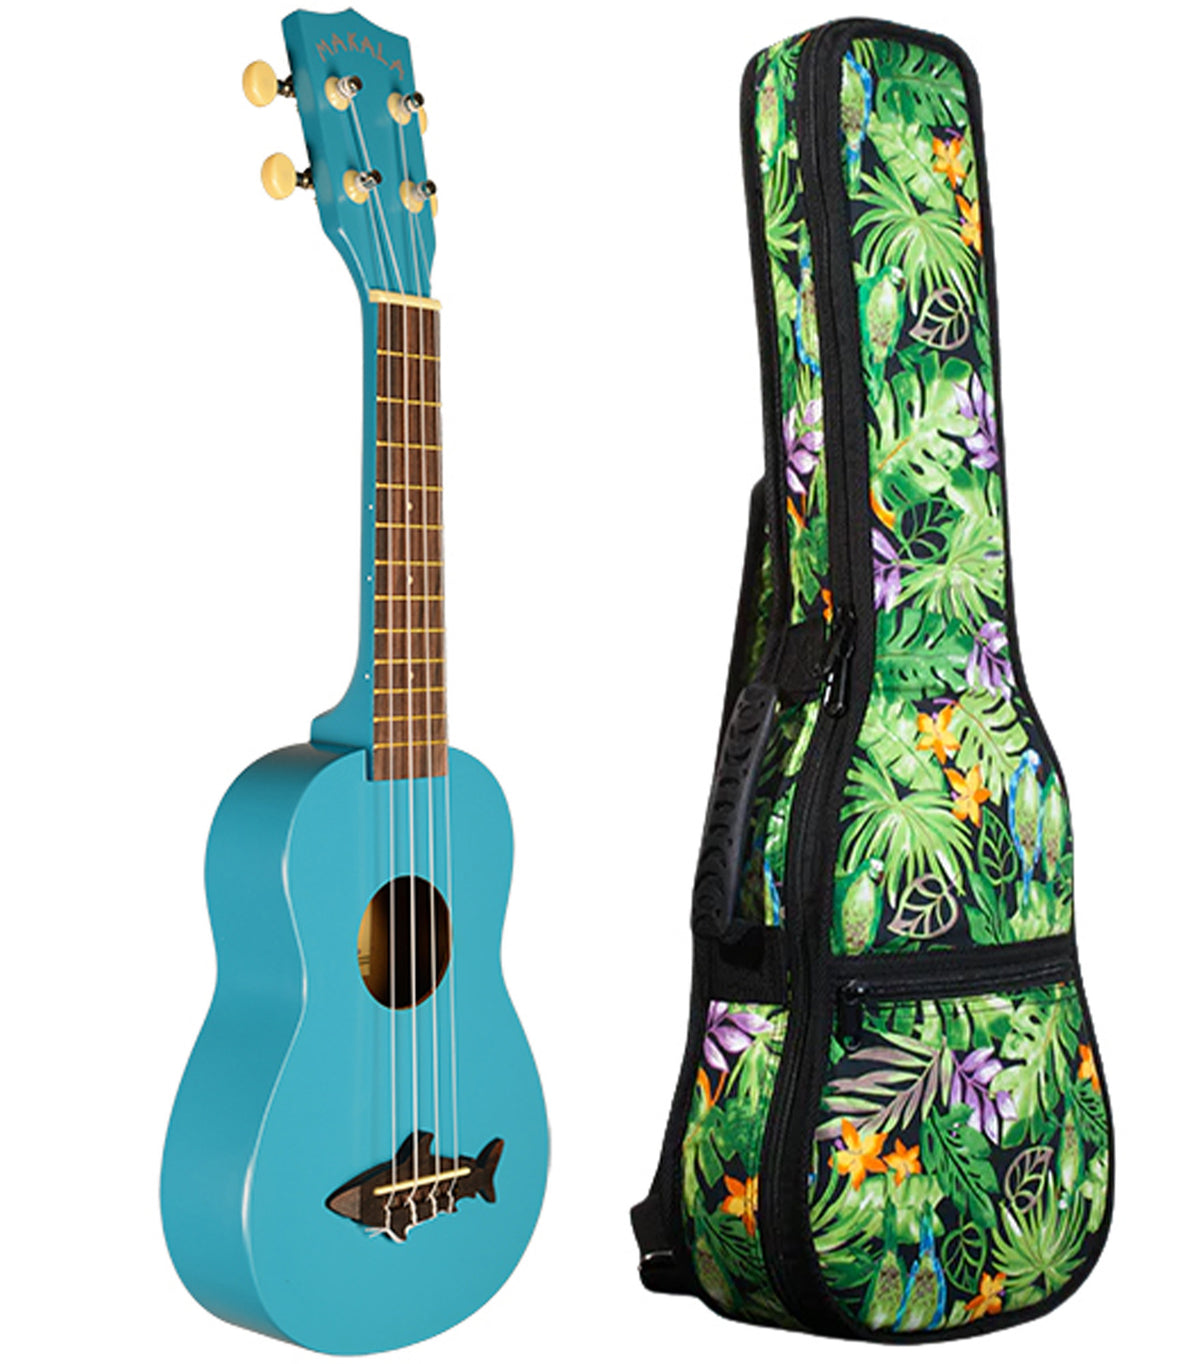 MK-SS/BLU Blue Soprano Shark Ukulele Includes Gigbag Floral Print, Padded with Backpack Straps